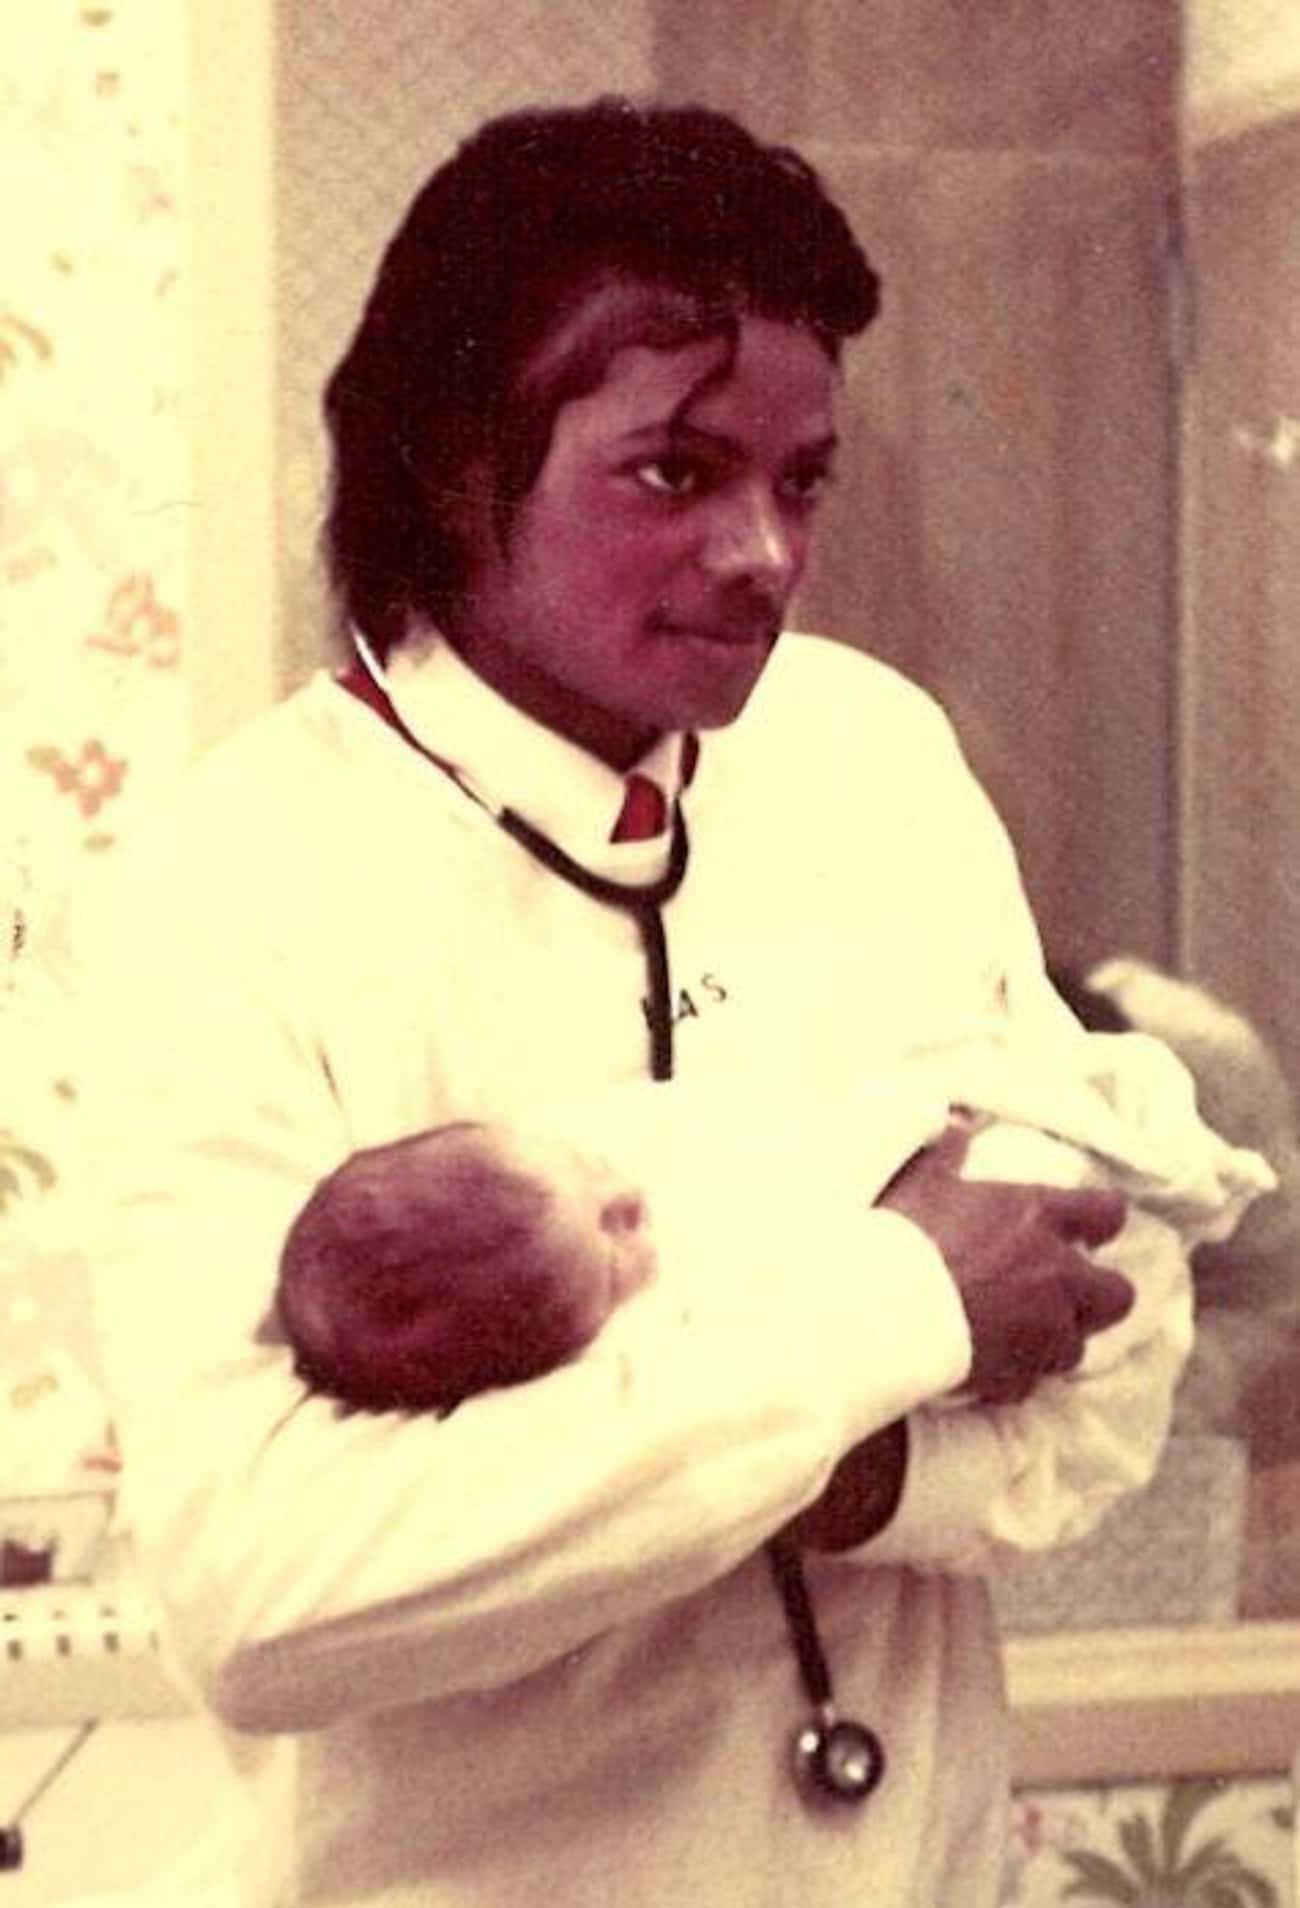 Michael Had Two Children Through Artificial Insemination